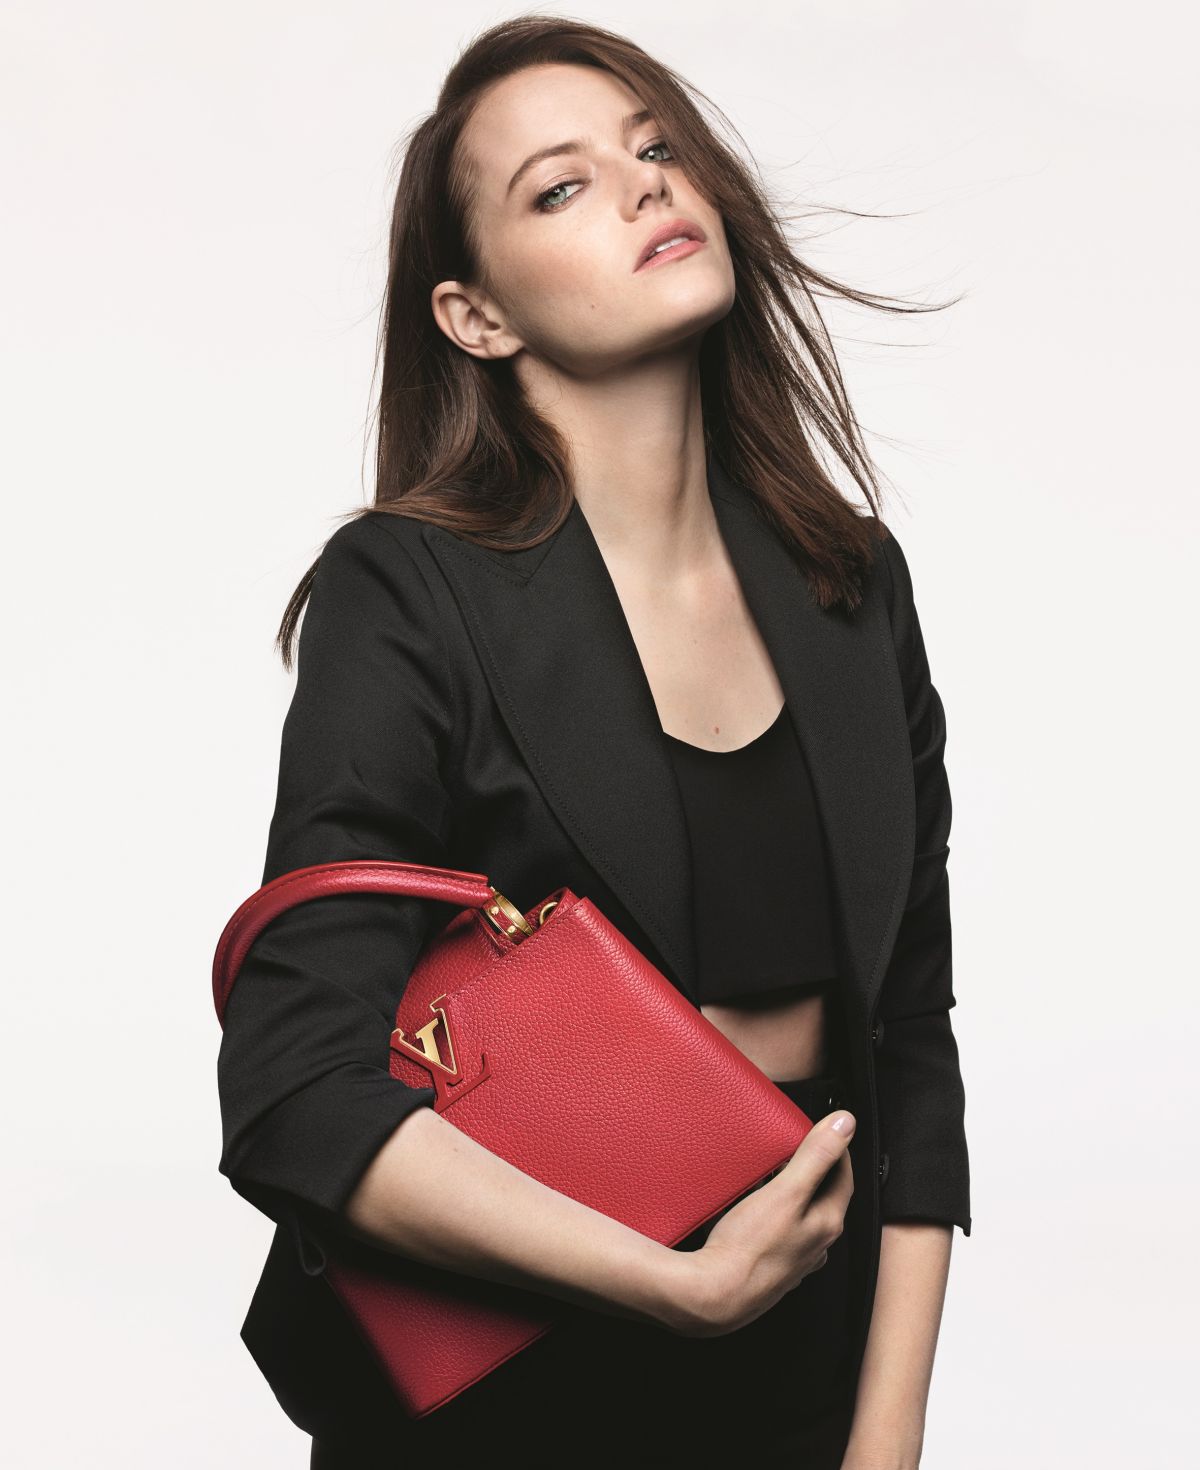 EMMA STONE for Louis Vuitton Handbag 2019 Campaign - HawtCelebs